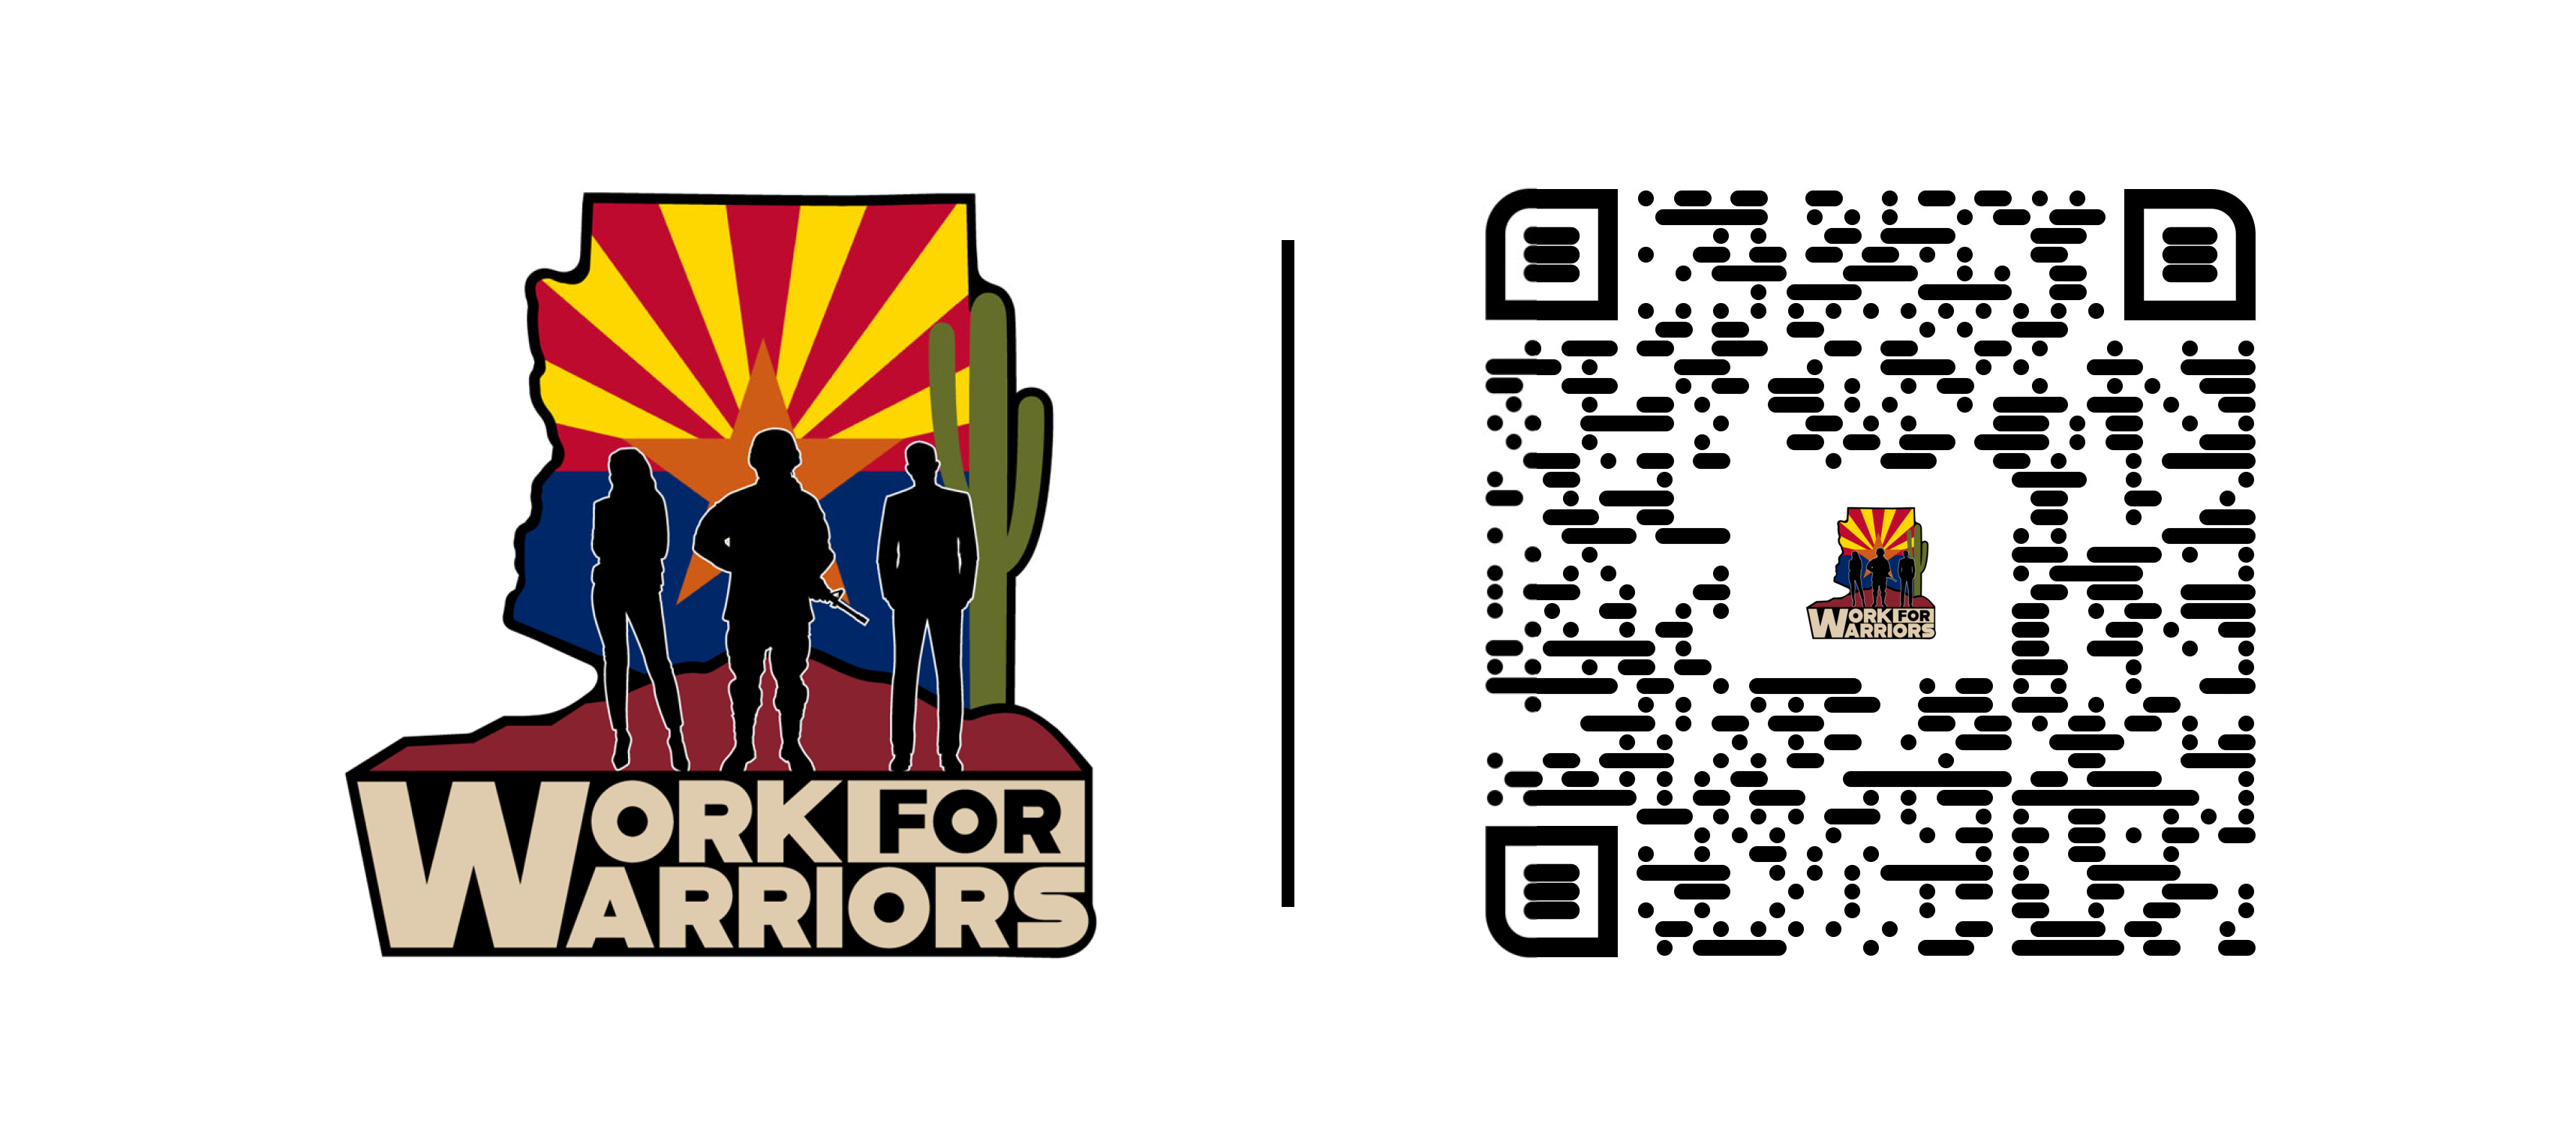 QR code work for warriors - Arizona